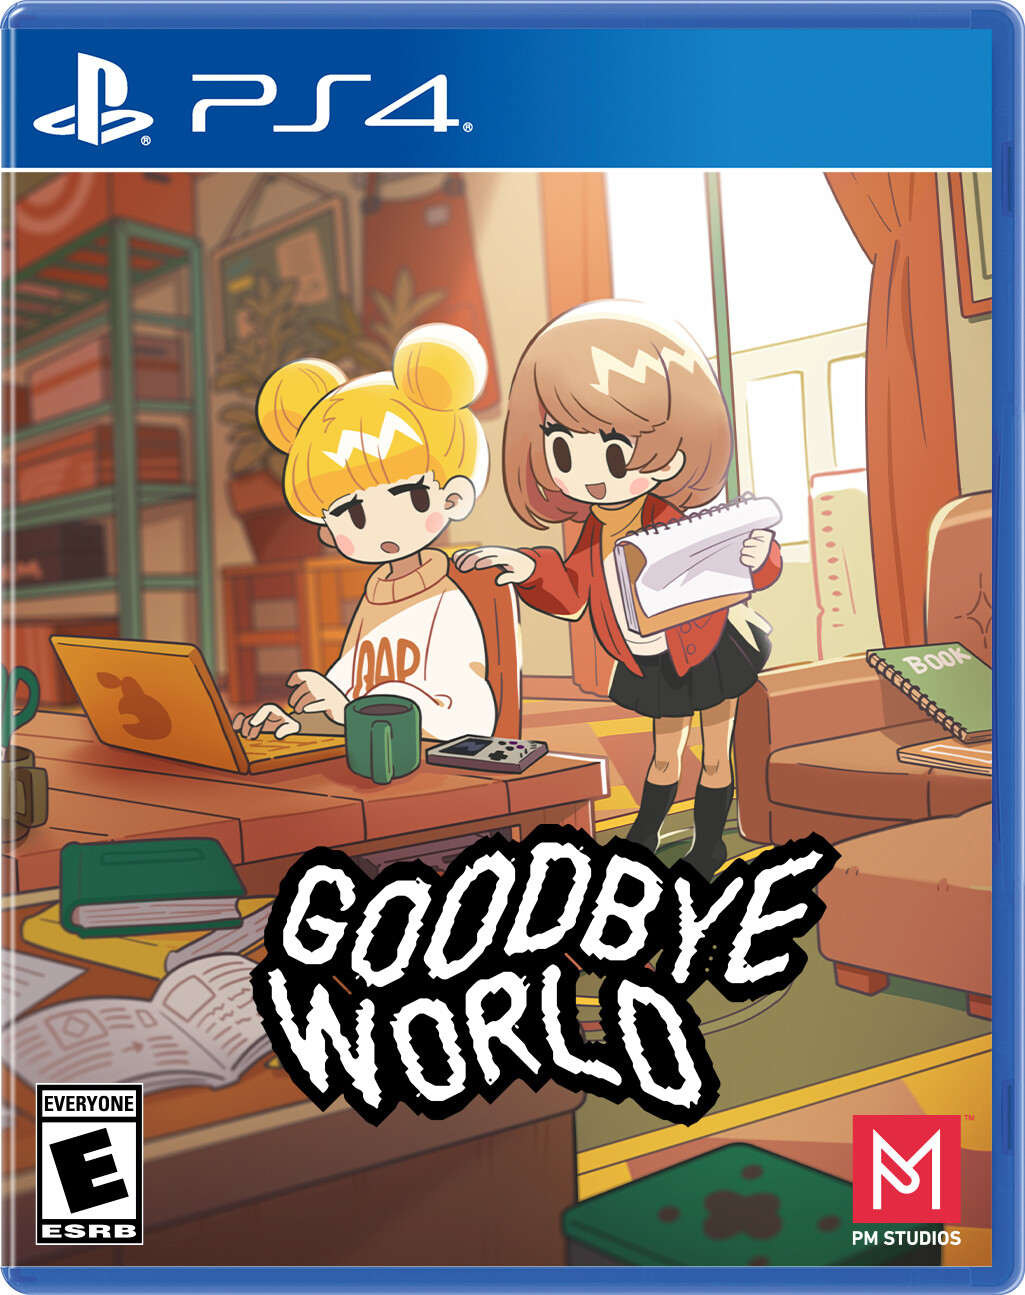 Goodbye World - PS4